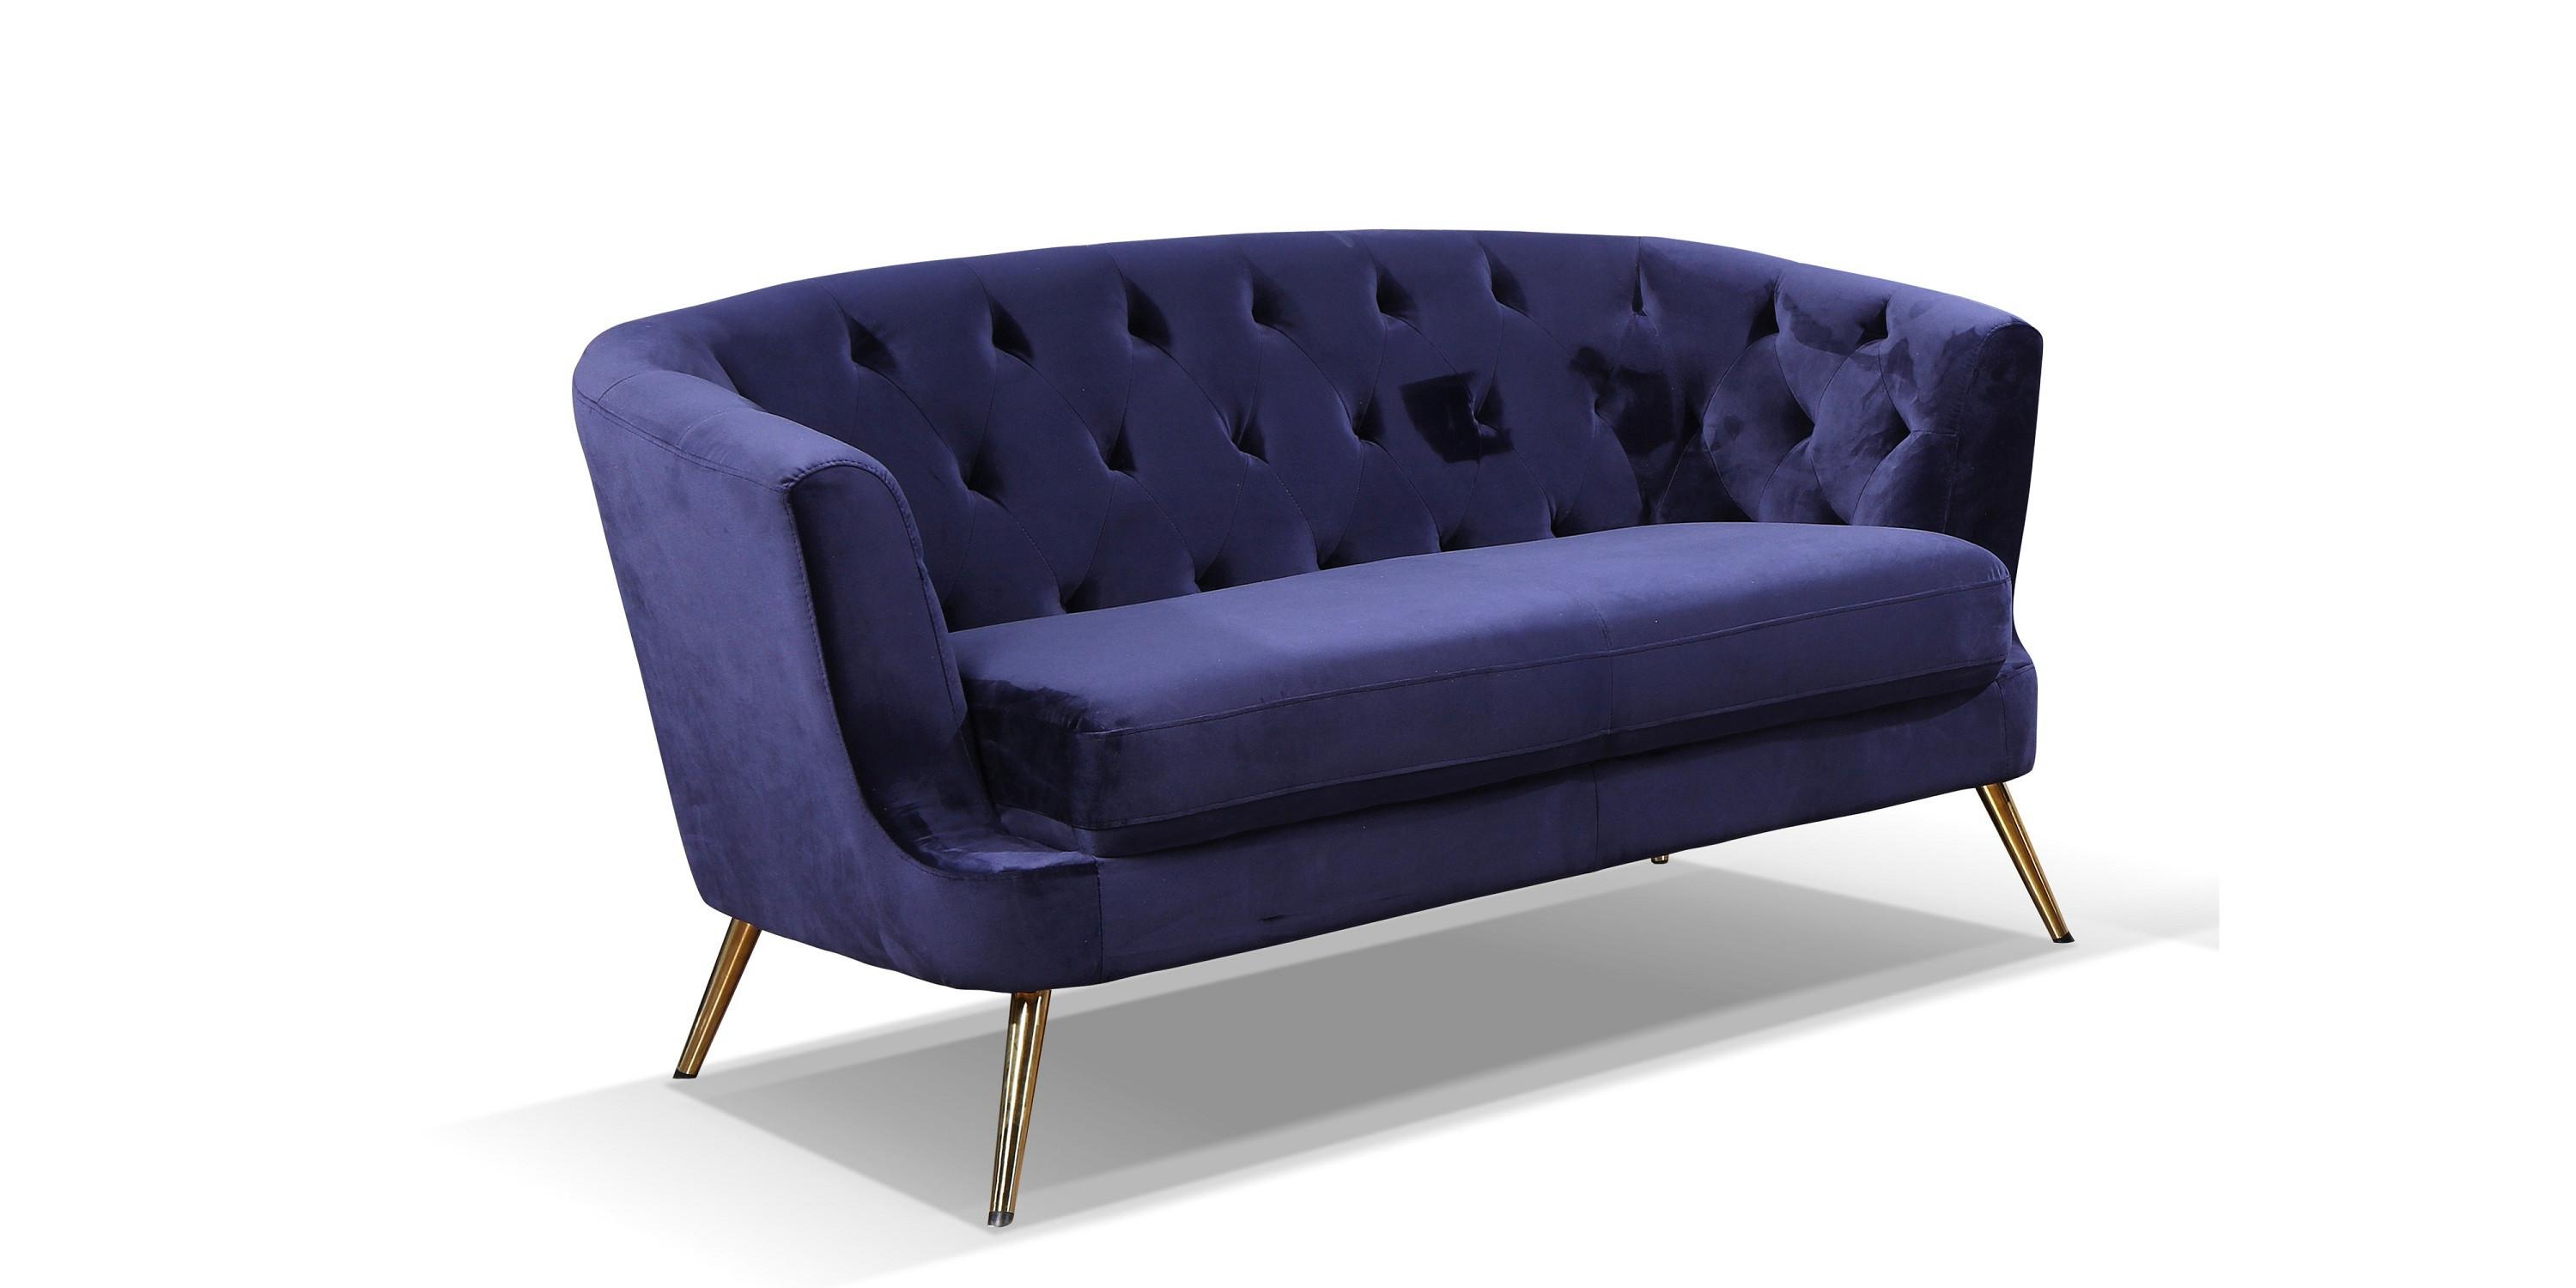 2-Sitzer-Sofa Lita Blau Samt - Blau/Goldfarben, MODERN, Textil/Metall (150/78/83cm) - Ti'me